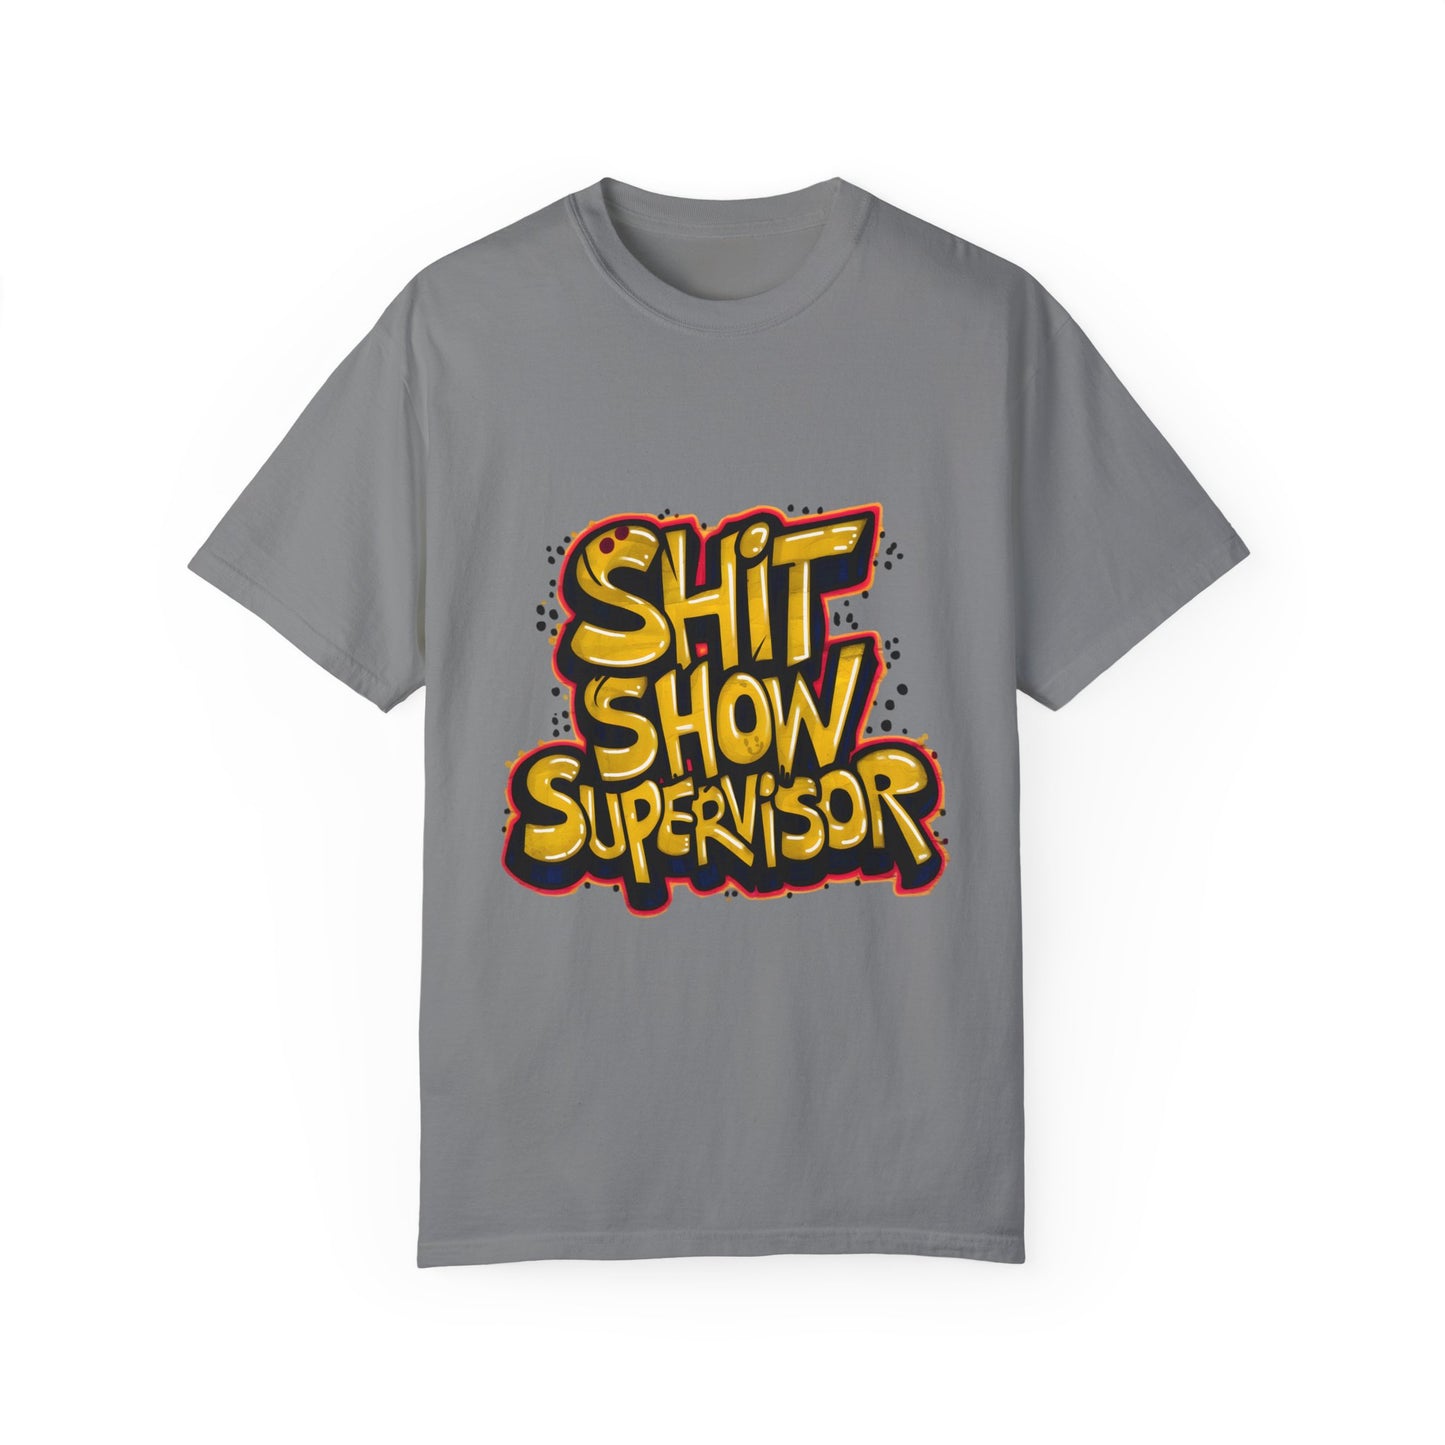 Shit Show Supervisor Urban Sarcastic Graphic Unisex Garment Dyed T-shirt Cotton Funny Humorous Graphic Soft Premium Unisex Men Women Grey T-shirt Birthday Gift-9